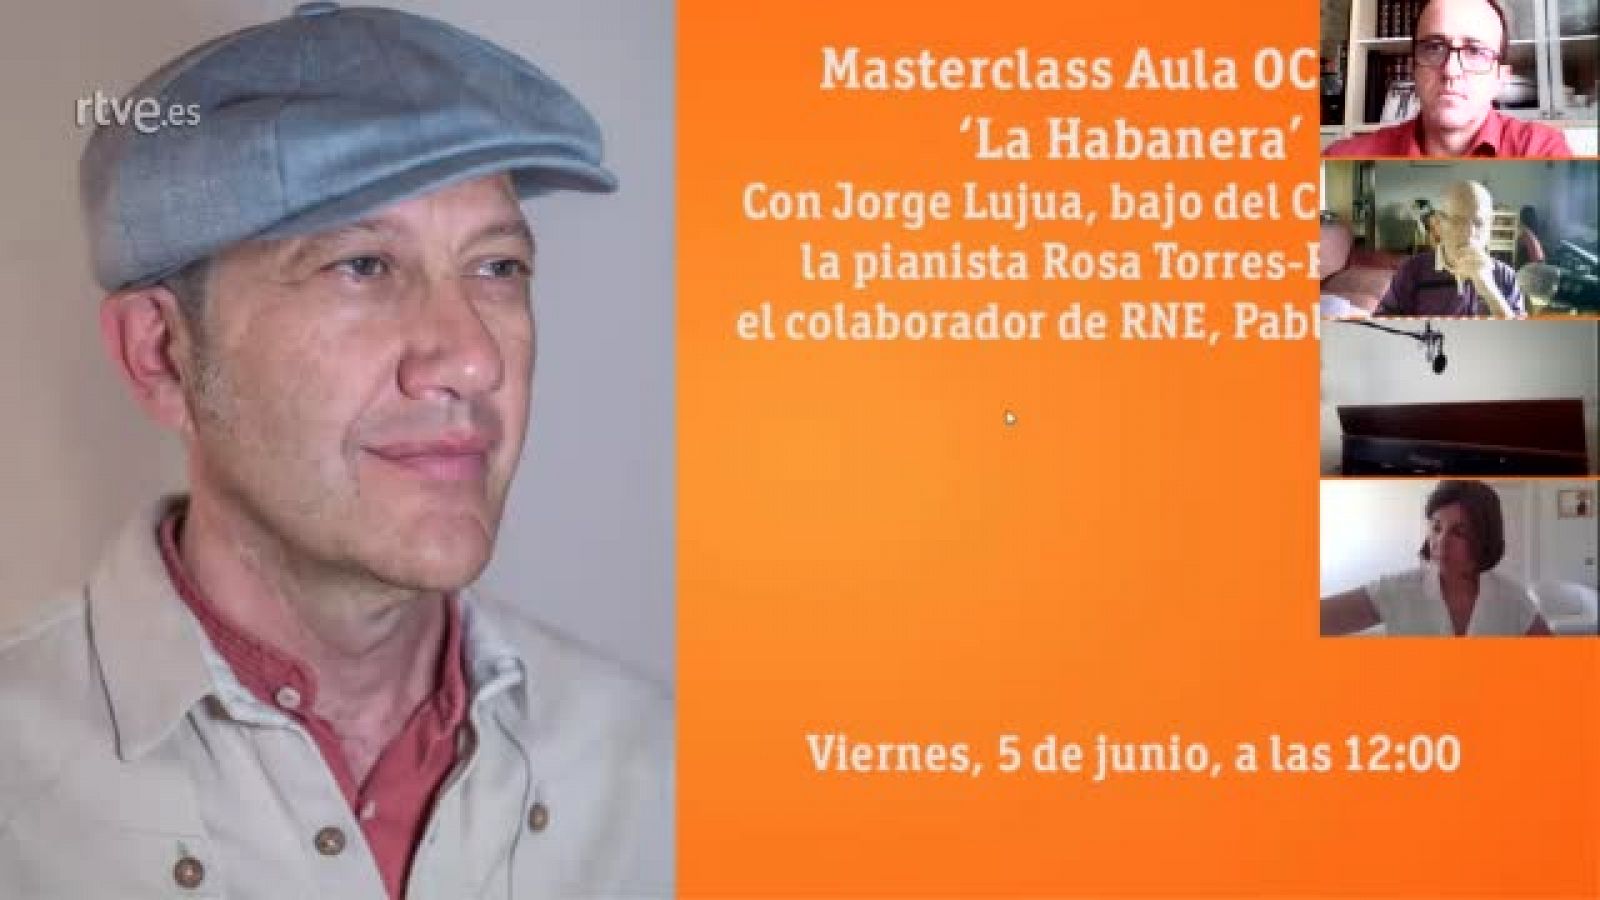 Orquesta y Coro de RTVE: Masterclass Aula OCRTVE Jorge Lujua La habanera  | RTVE Play